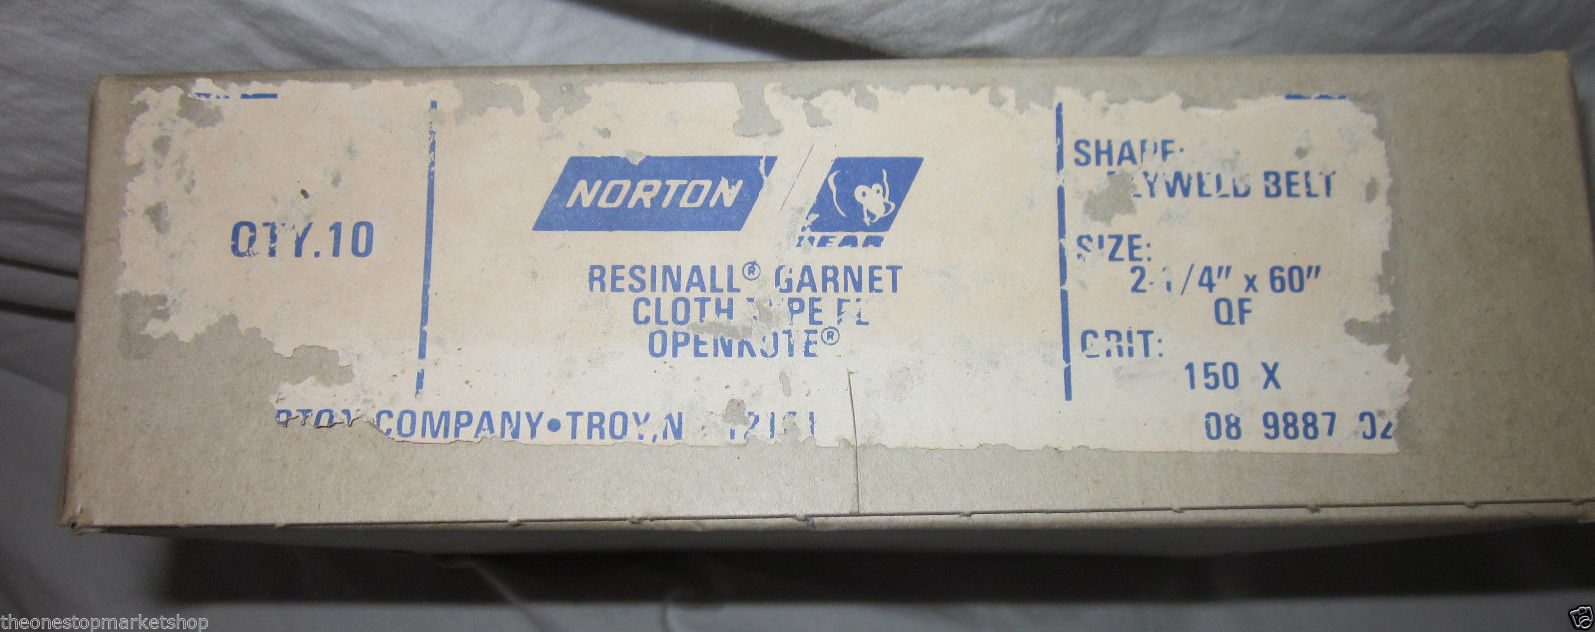 10x Norton Resinall Garnet Plyweld Belt 2.25" x 60" 150-X Cloth Type Openkote - $15.83